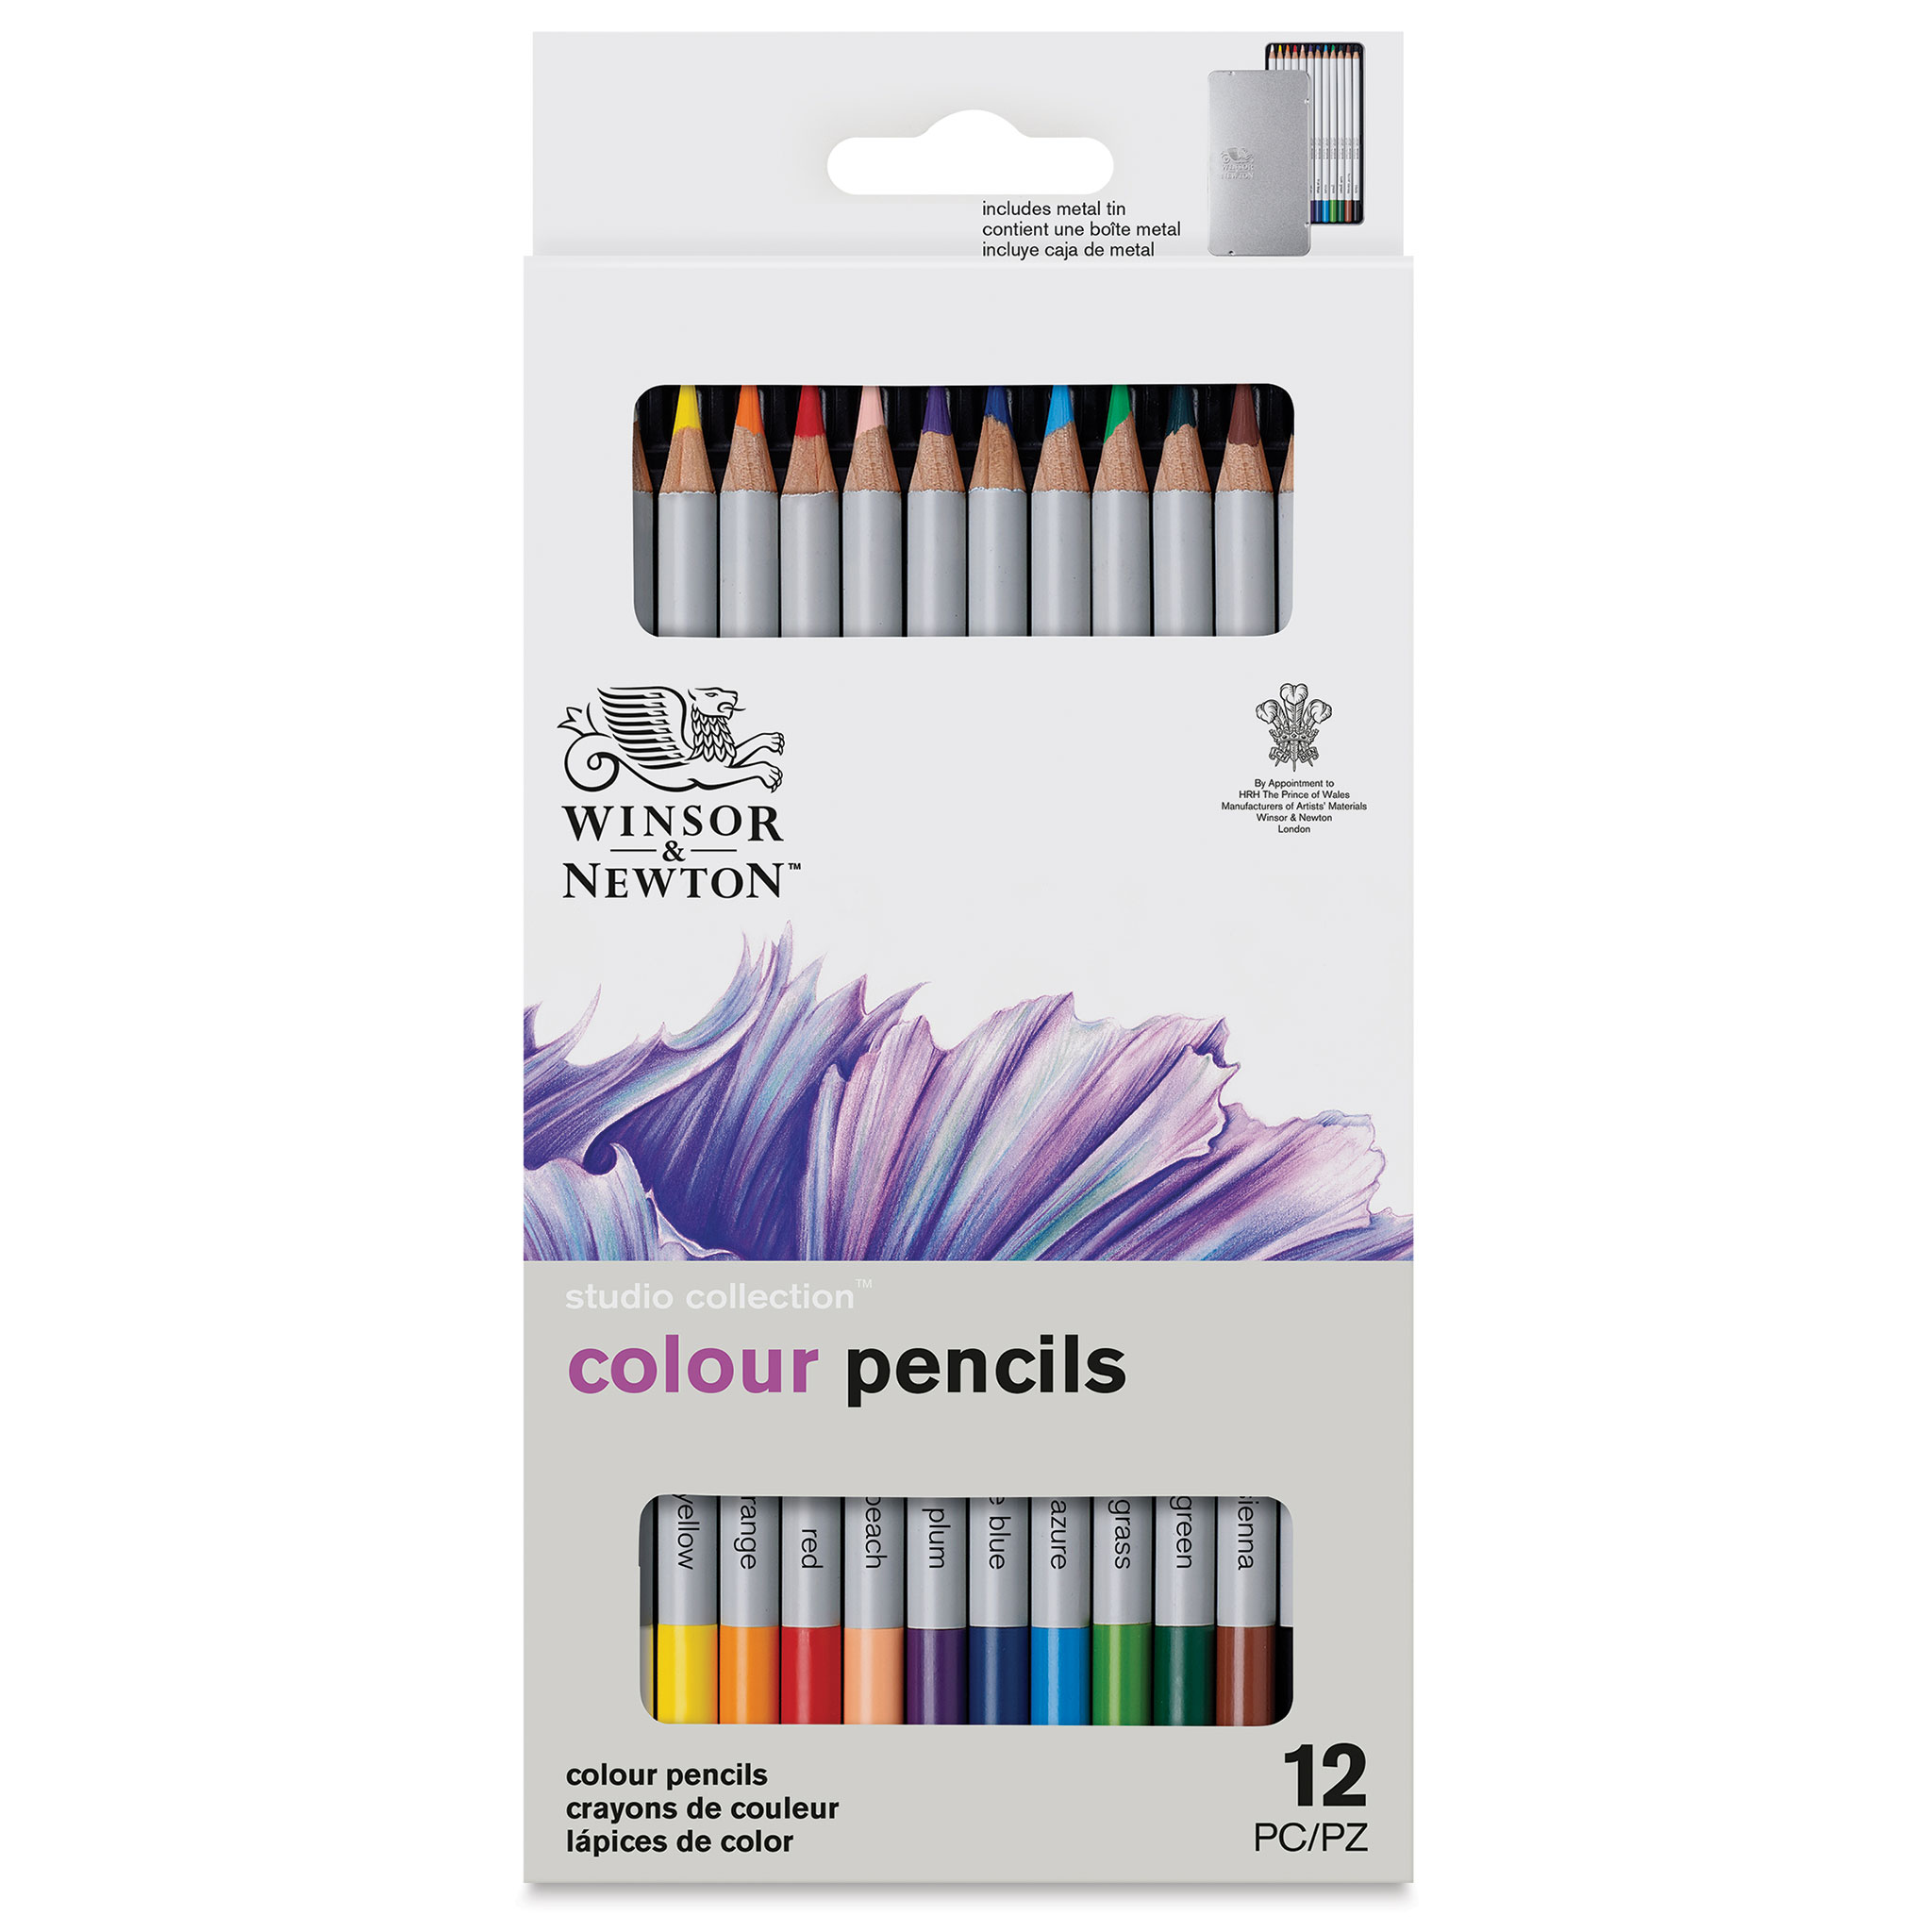 Winsor & Newton Studio Collection Watercolor Pencils - Set of 50